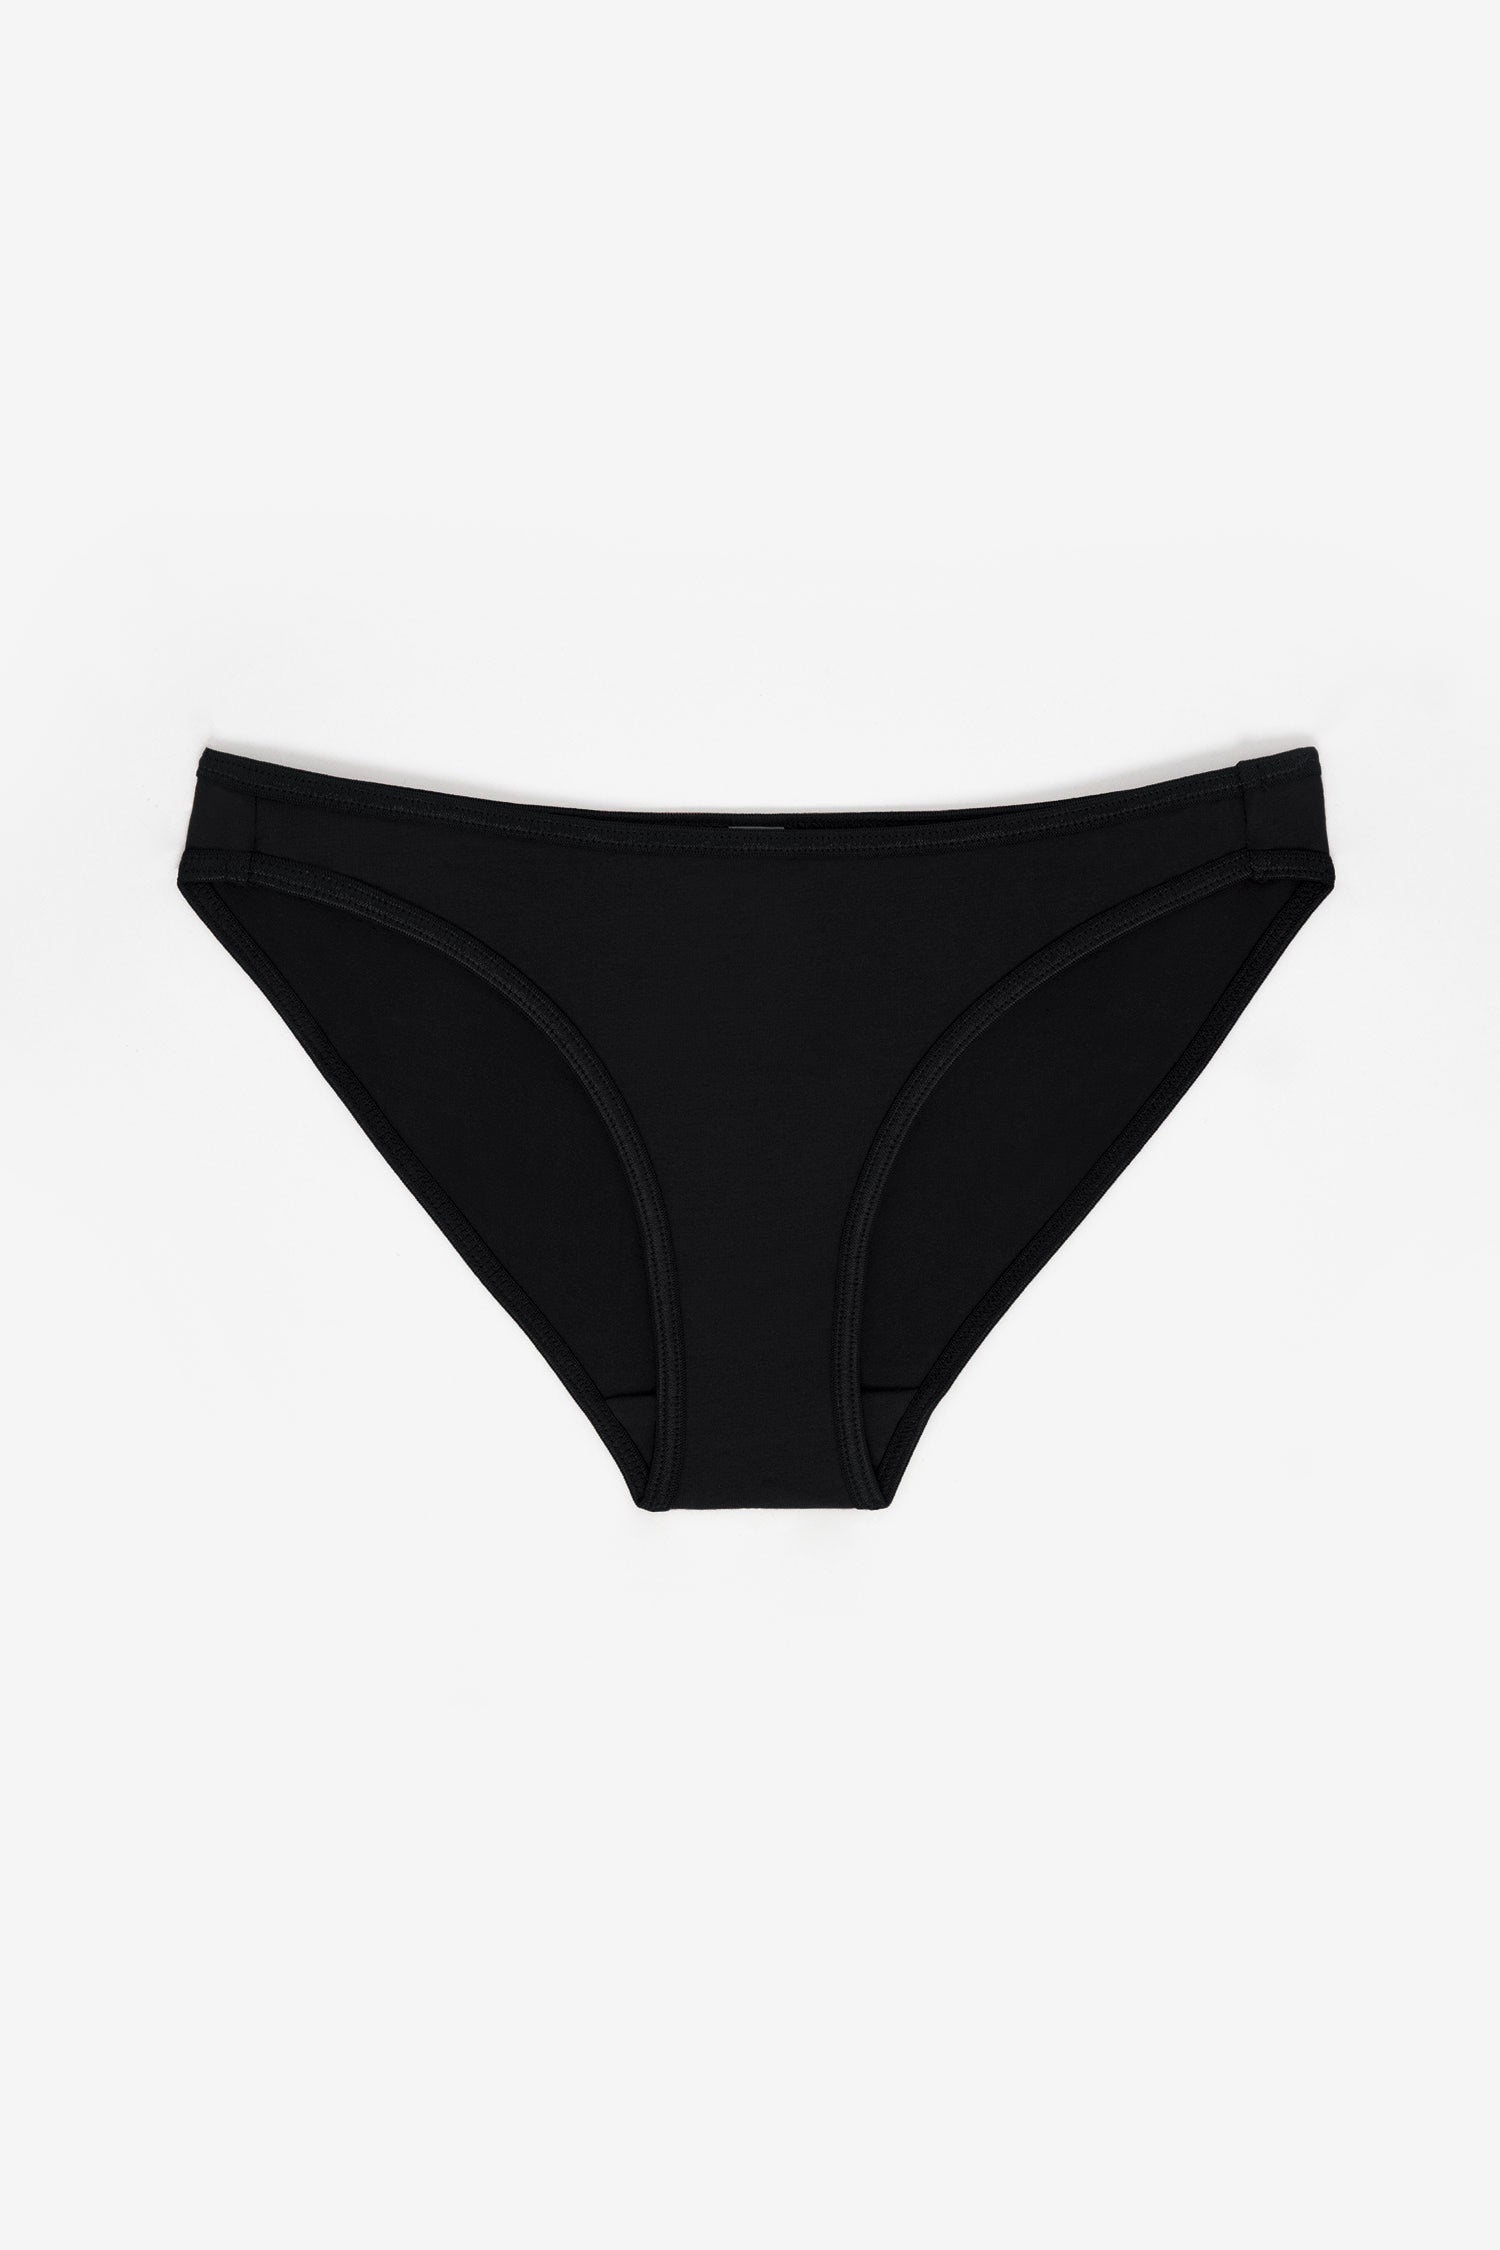 MESH PANTY Women Bikini Black Panty - Buy MESH BLACK MESH PANTY Women  Bikini Black Panty Online at Best Prices in India